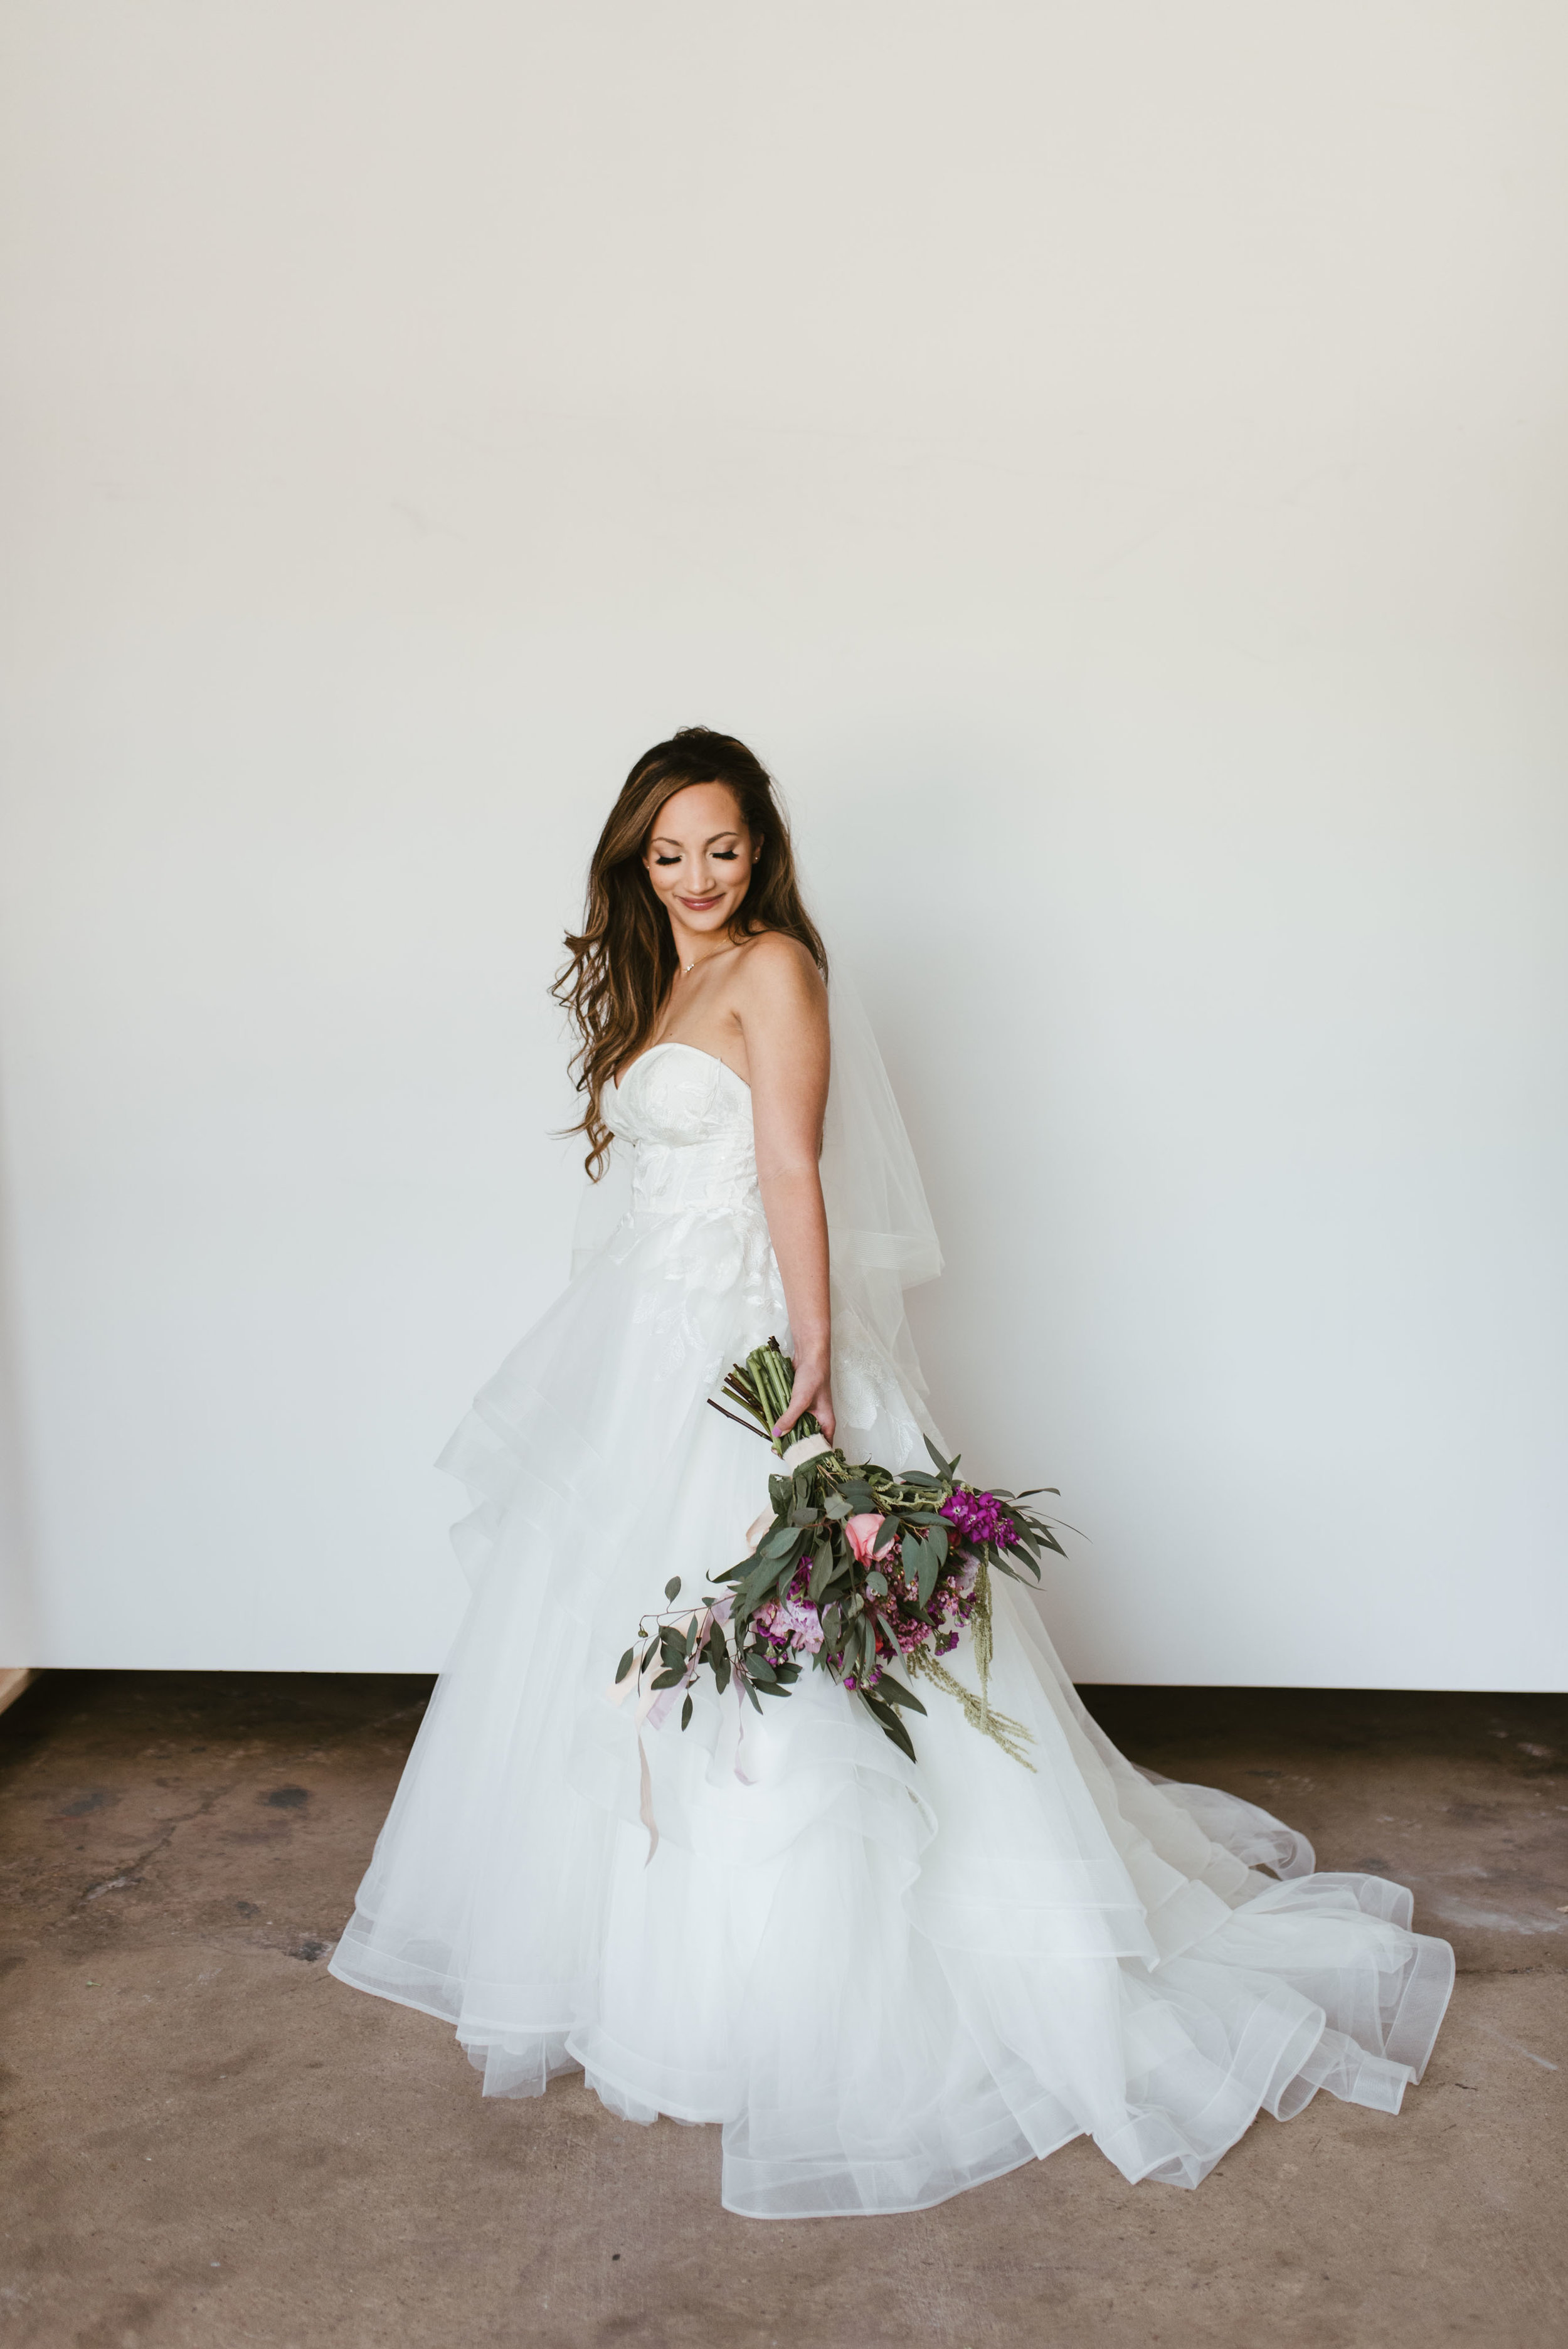  The TX Studio Bridal Session | Fort Worth Wedding Photographer | Jordan Mitchell Photography | www.jordanmitchellphotography.com 